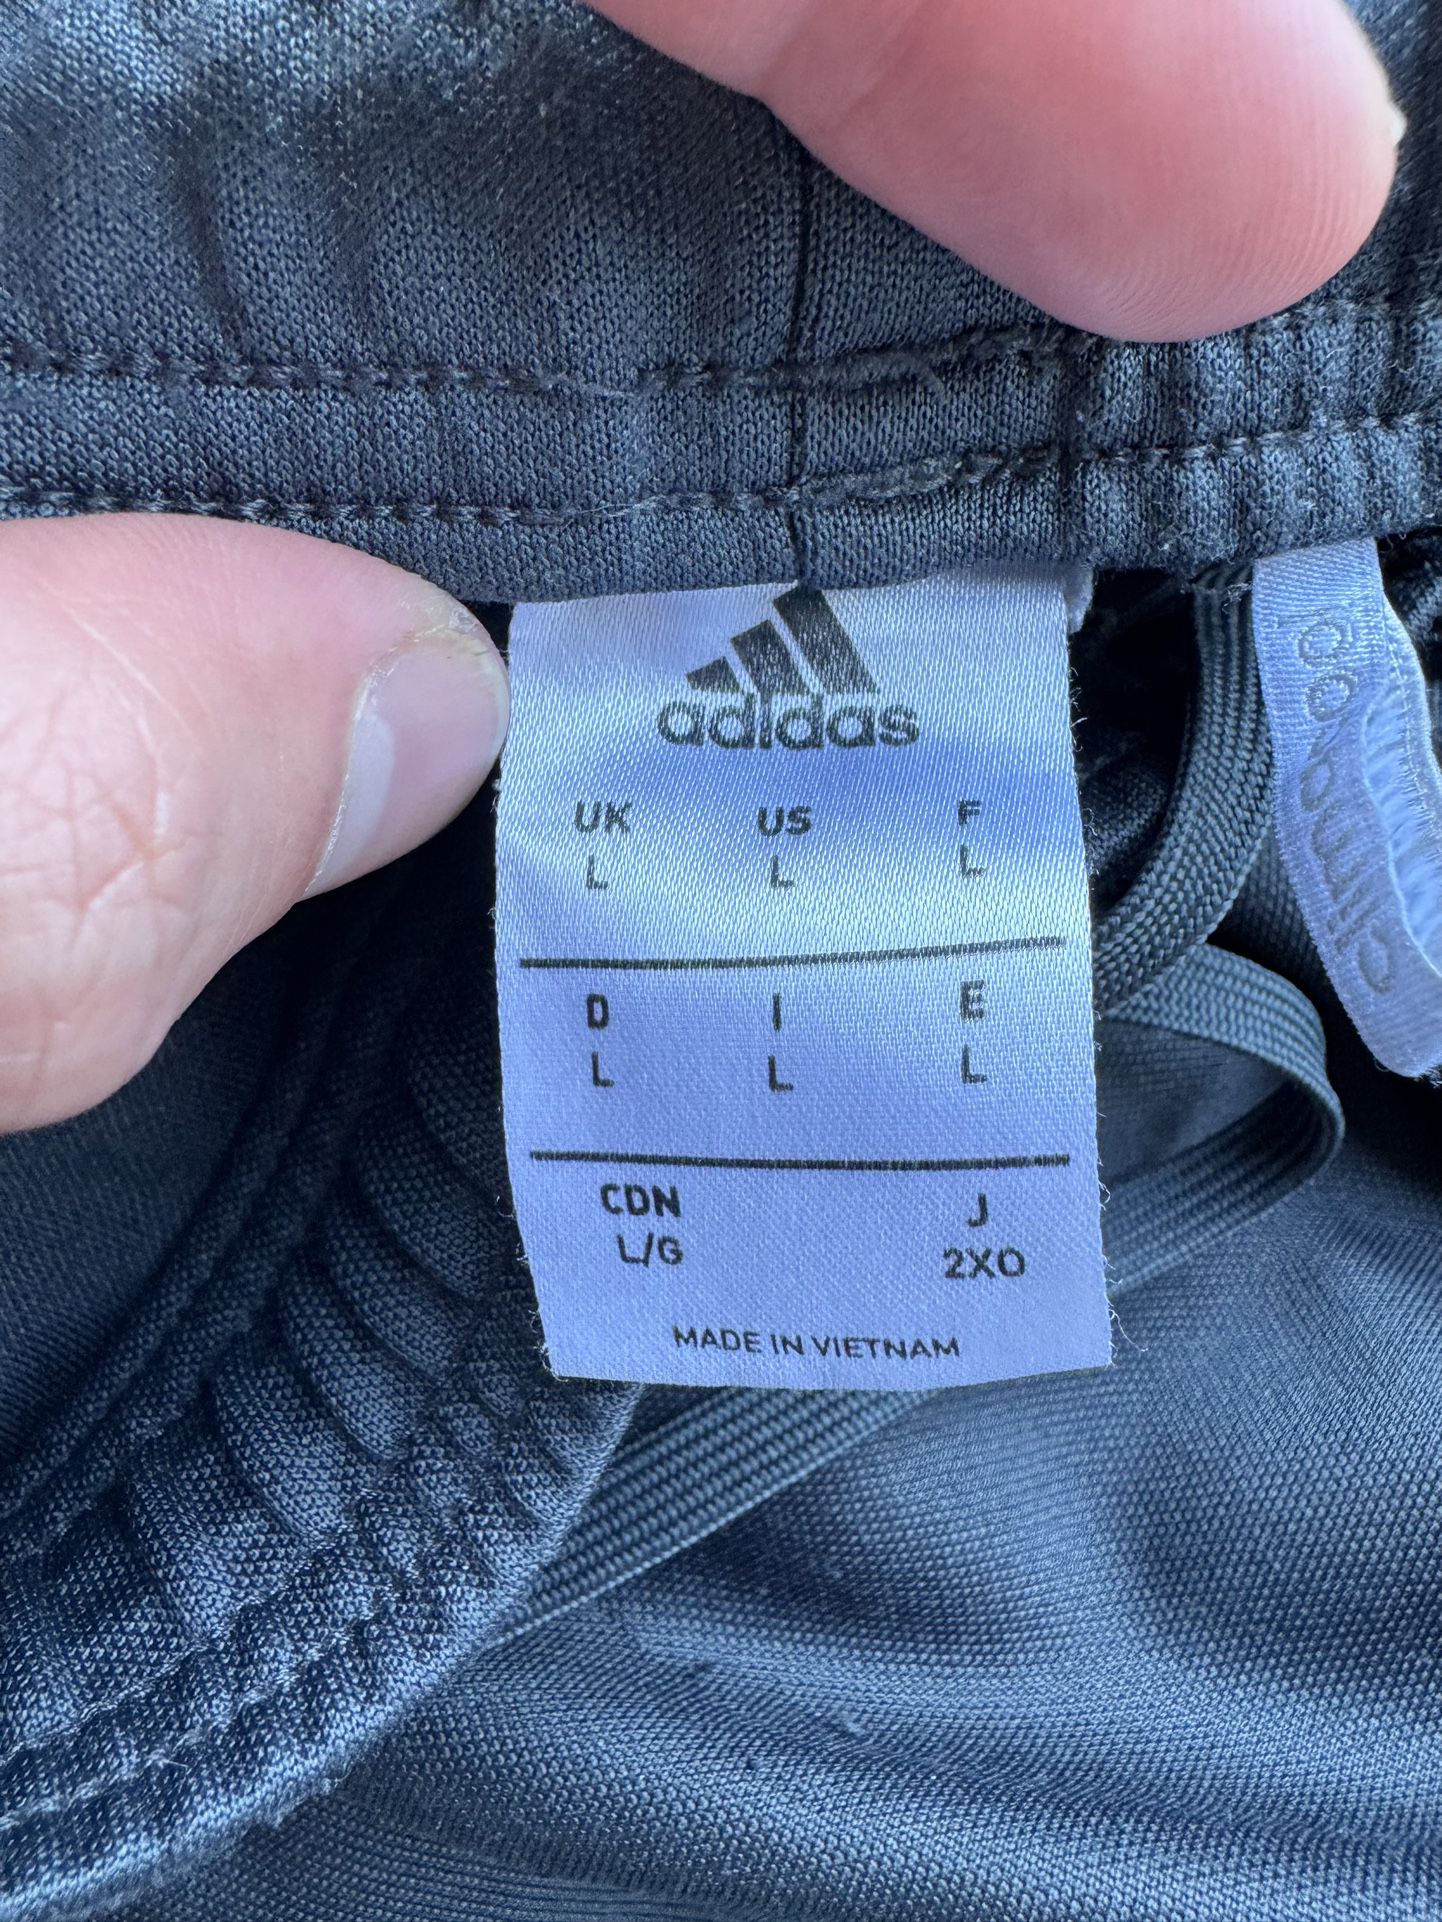 Adidas Joggers - Size L